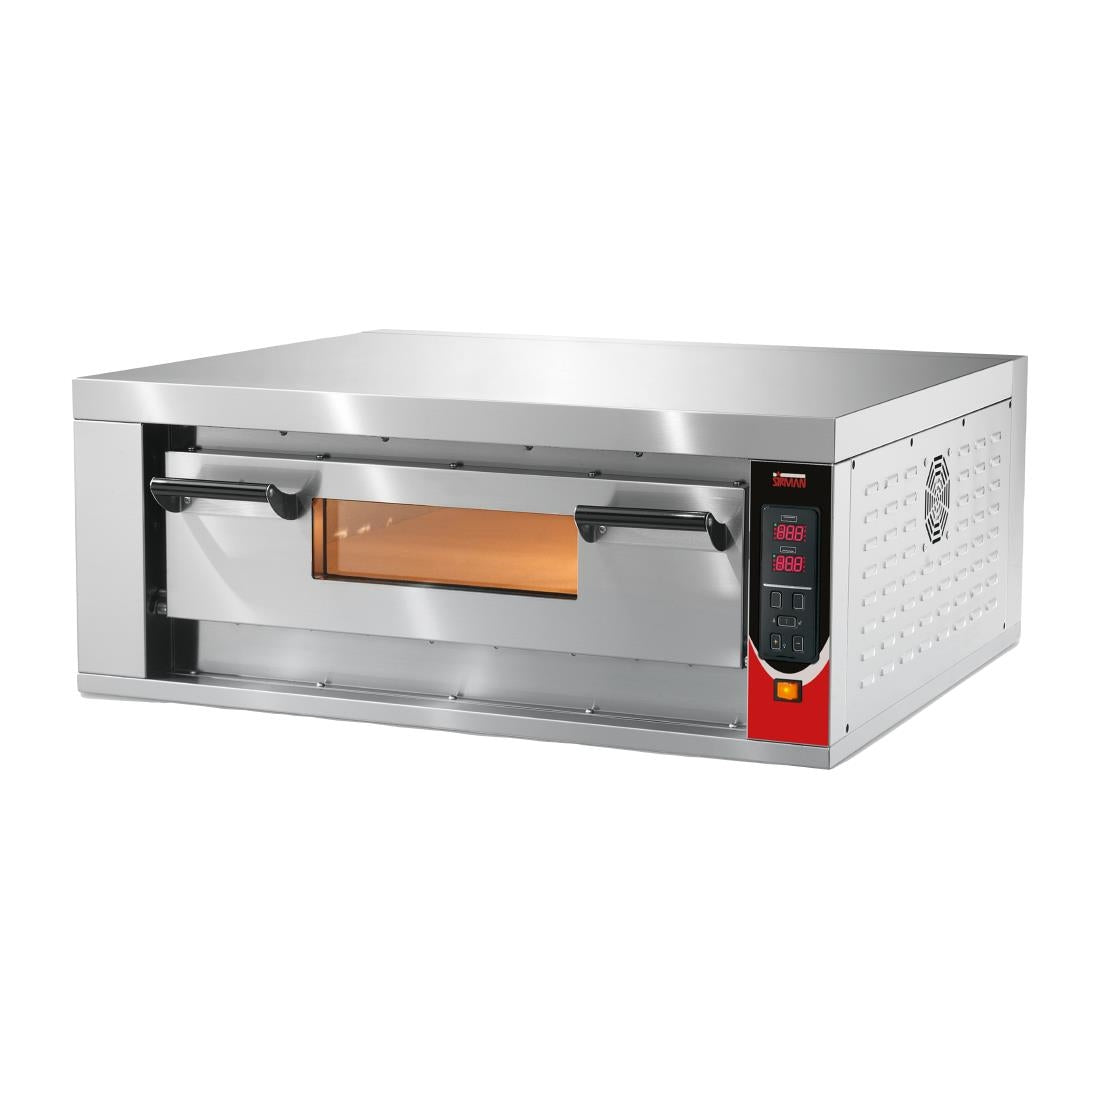 CU080 Sirman Vesuvio 70x70 Single Deck Pizza Oven JD Catering Equipment Solutions Ltd